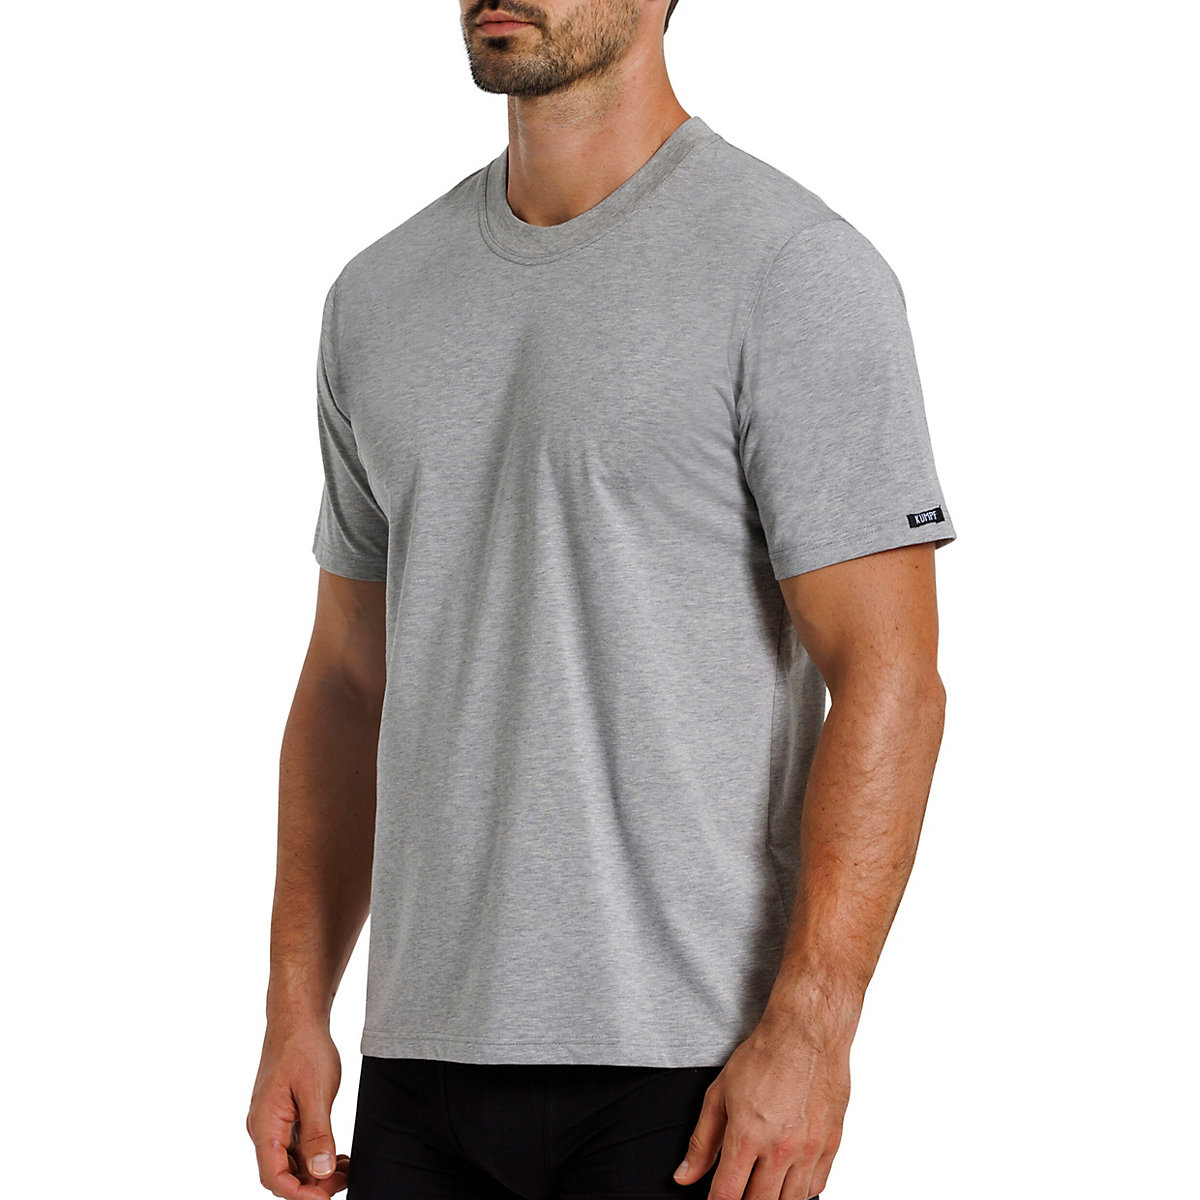 Kumpf Body Fashion 4er Sparpack Herren T-Shirt Bio Cotton Unterhemden hellgrau